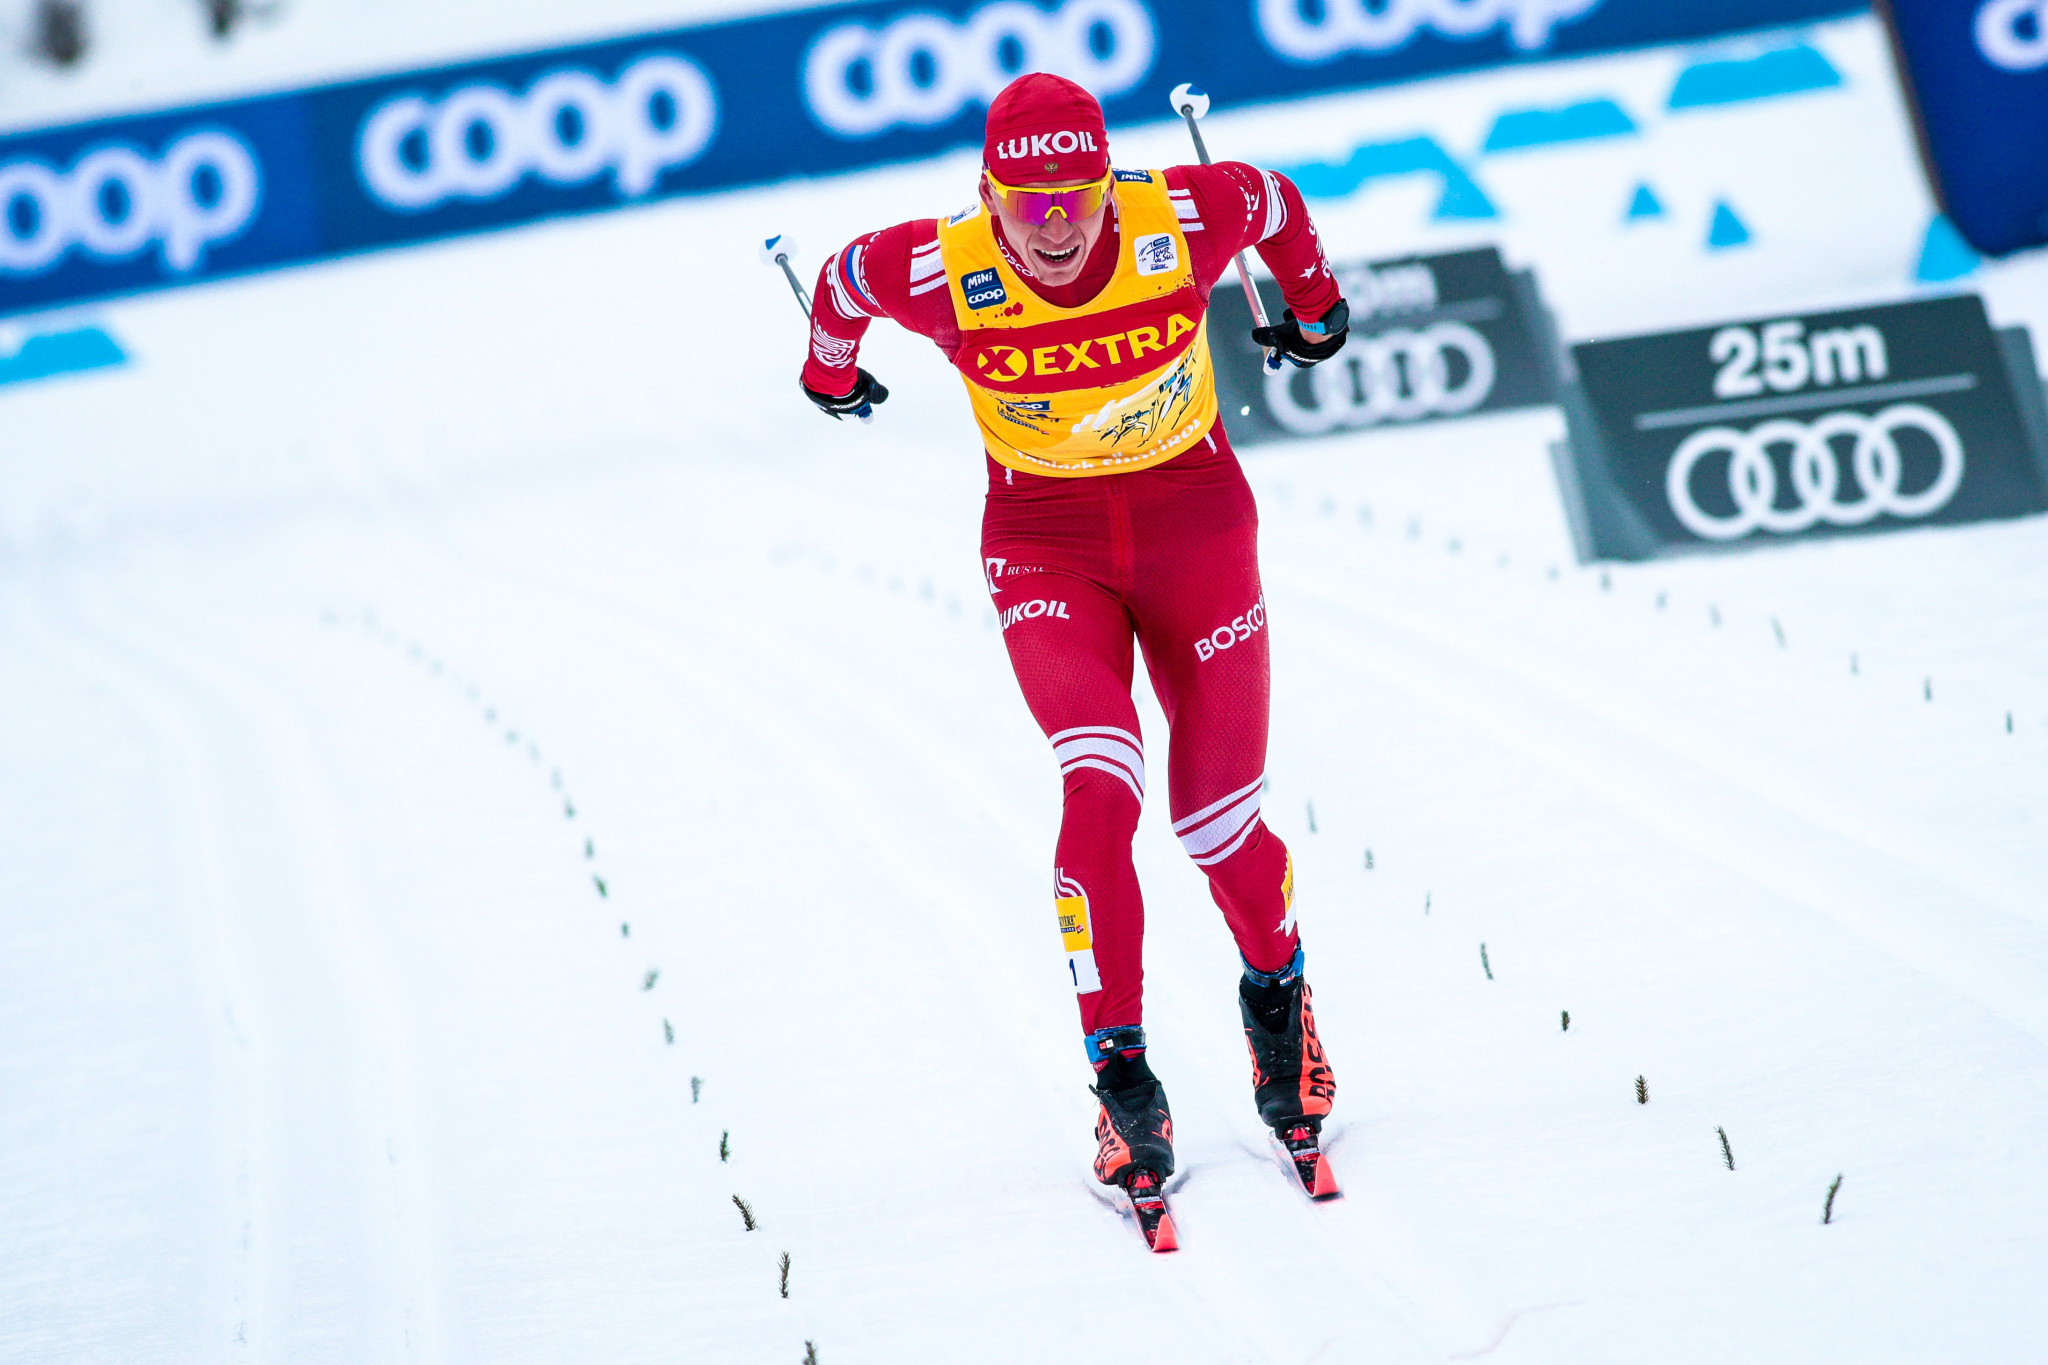 Alexander Bolshunov claimed his fourth successive victory in this season's Tour de Ski ©Getty Images